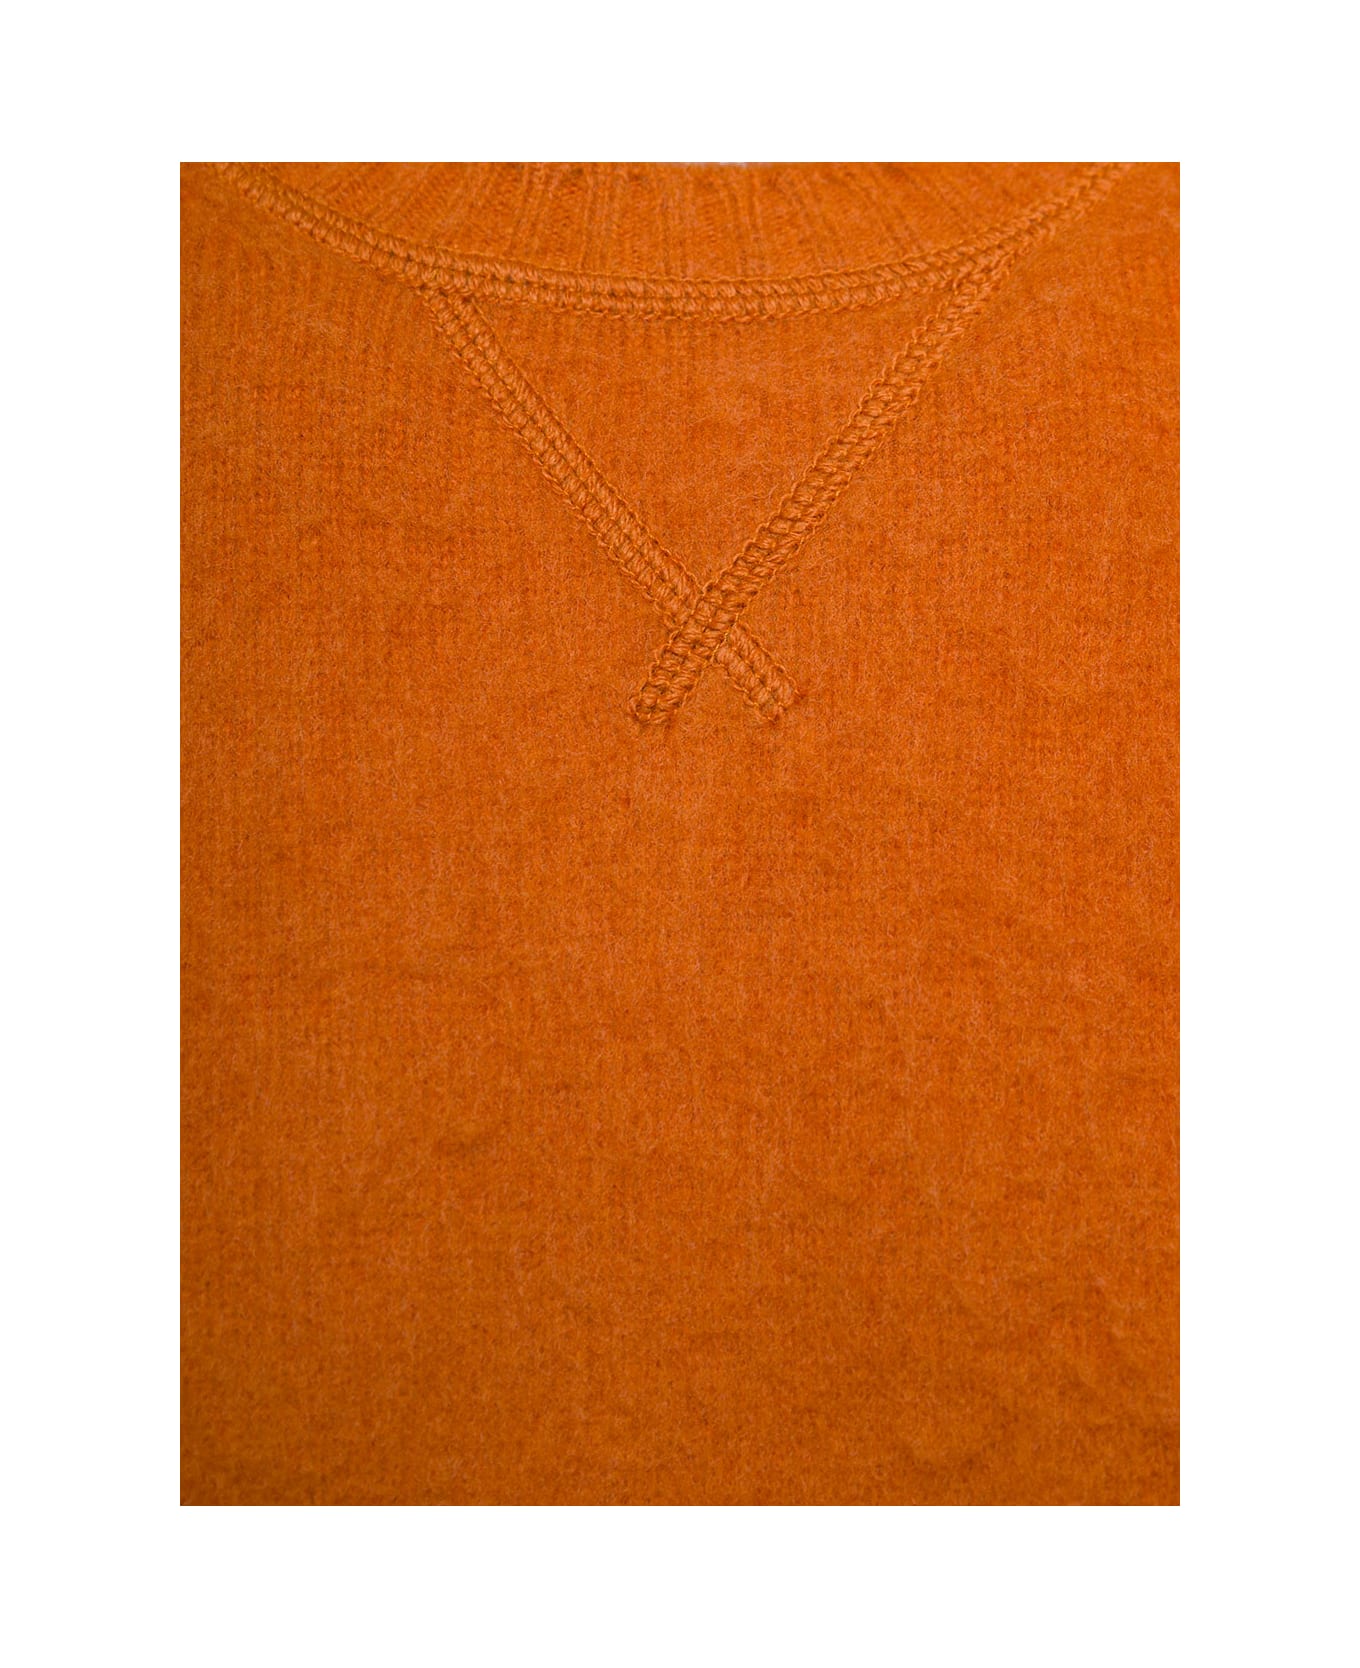 Tagliatore Orange Crewneck Pullover In Brushed Wool Man - Orange